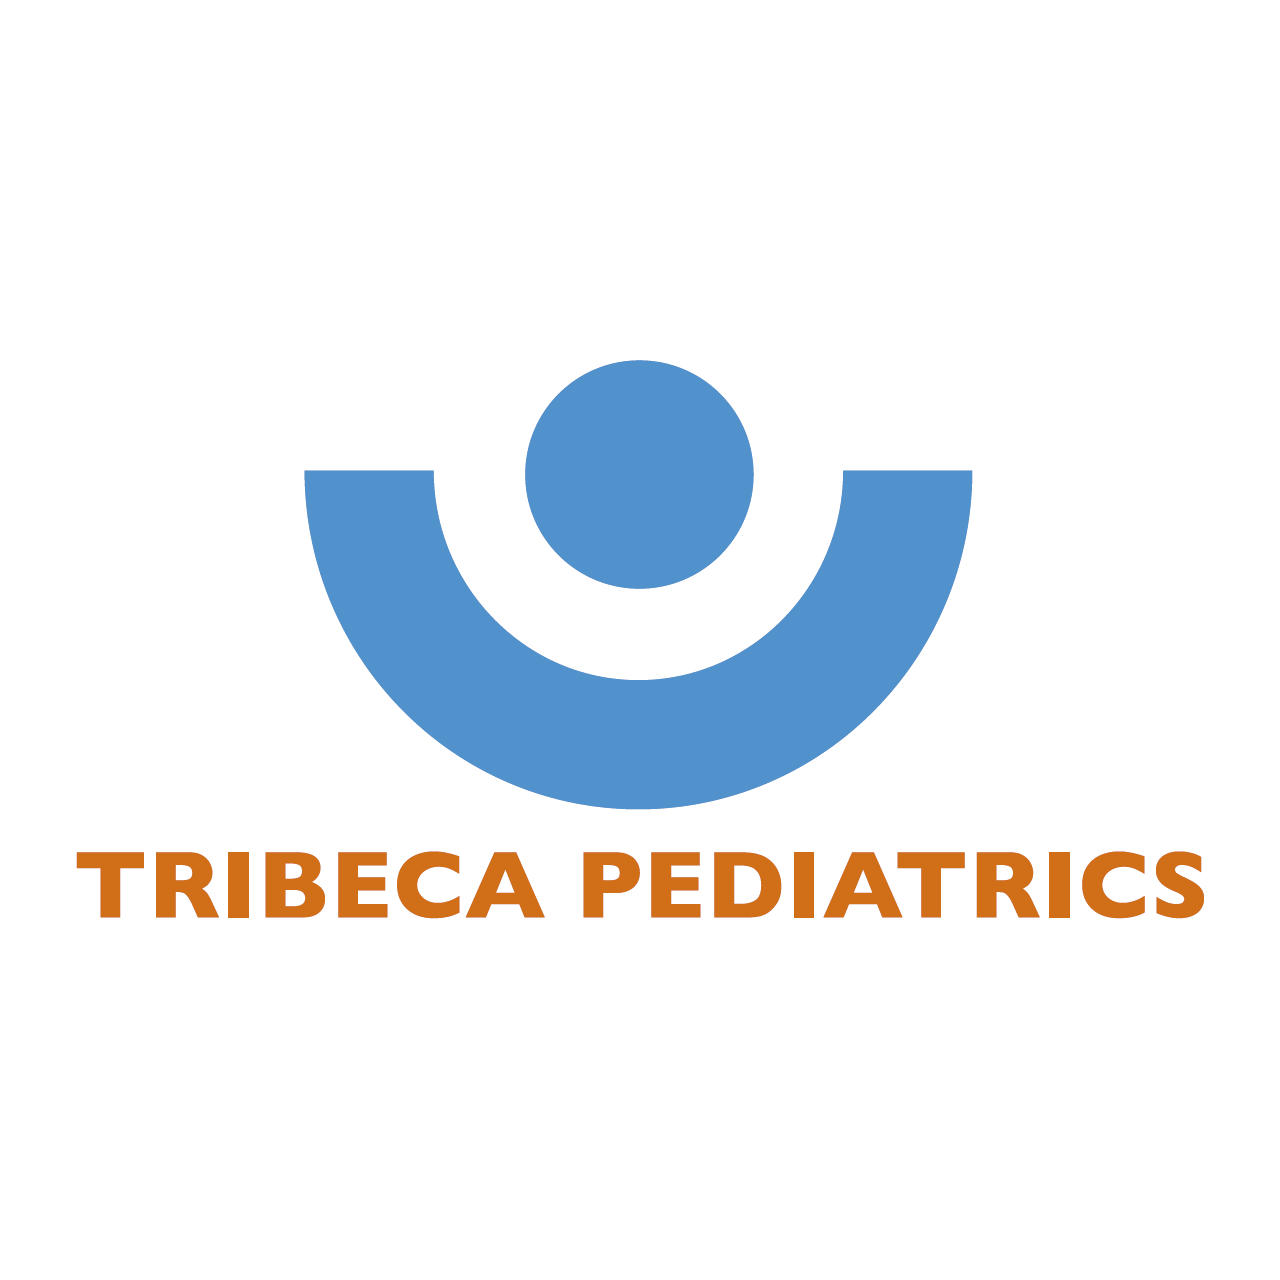 Photo of Tribeca Pediatrics - Bay Ridge in Brooklyn City, New York, United States - 3 Picture of Point of interest, Establishment, Health, Doctor